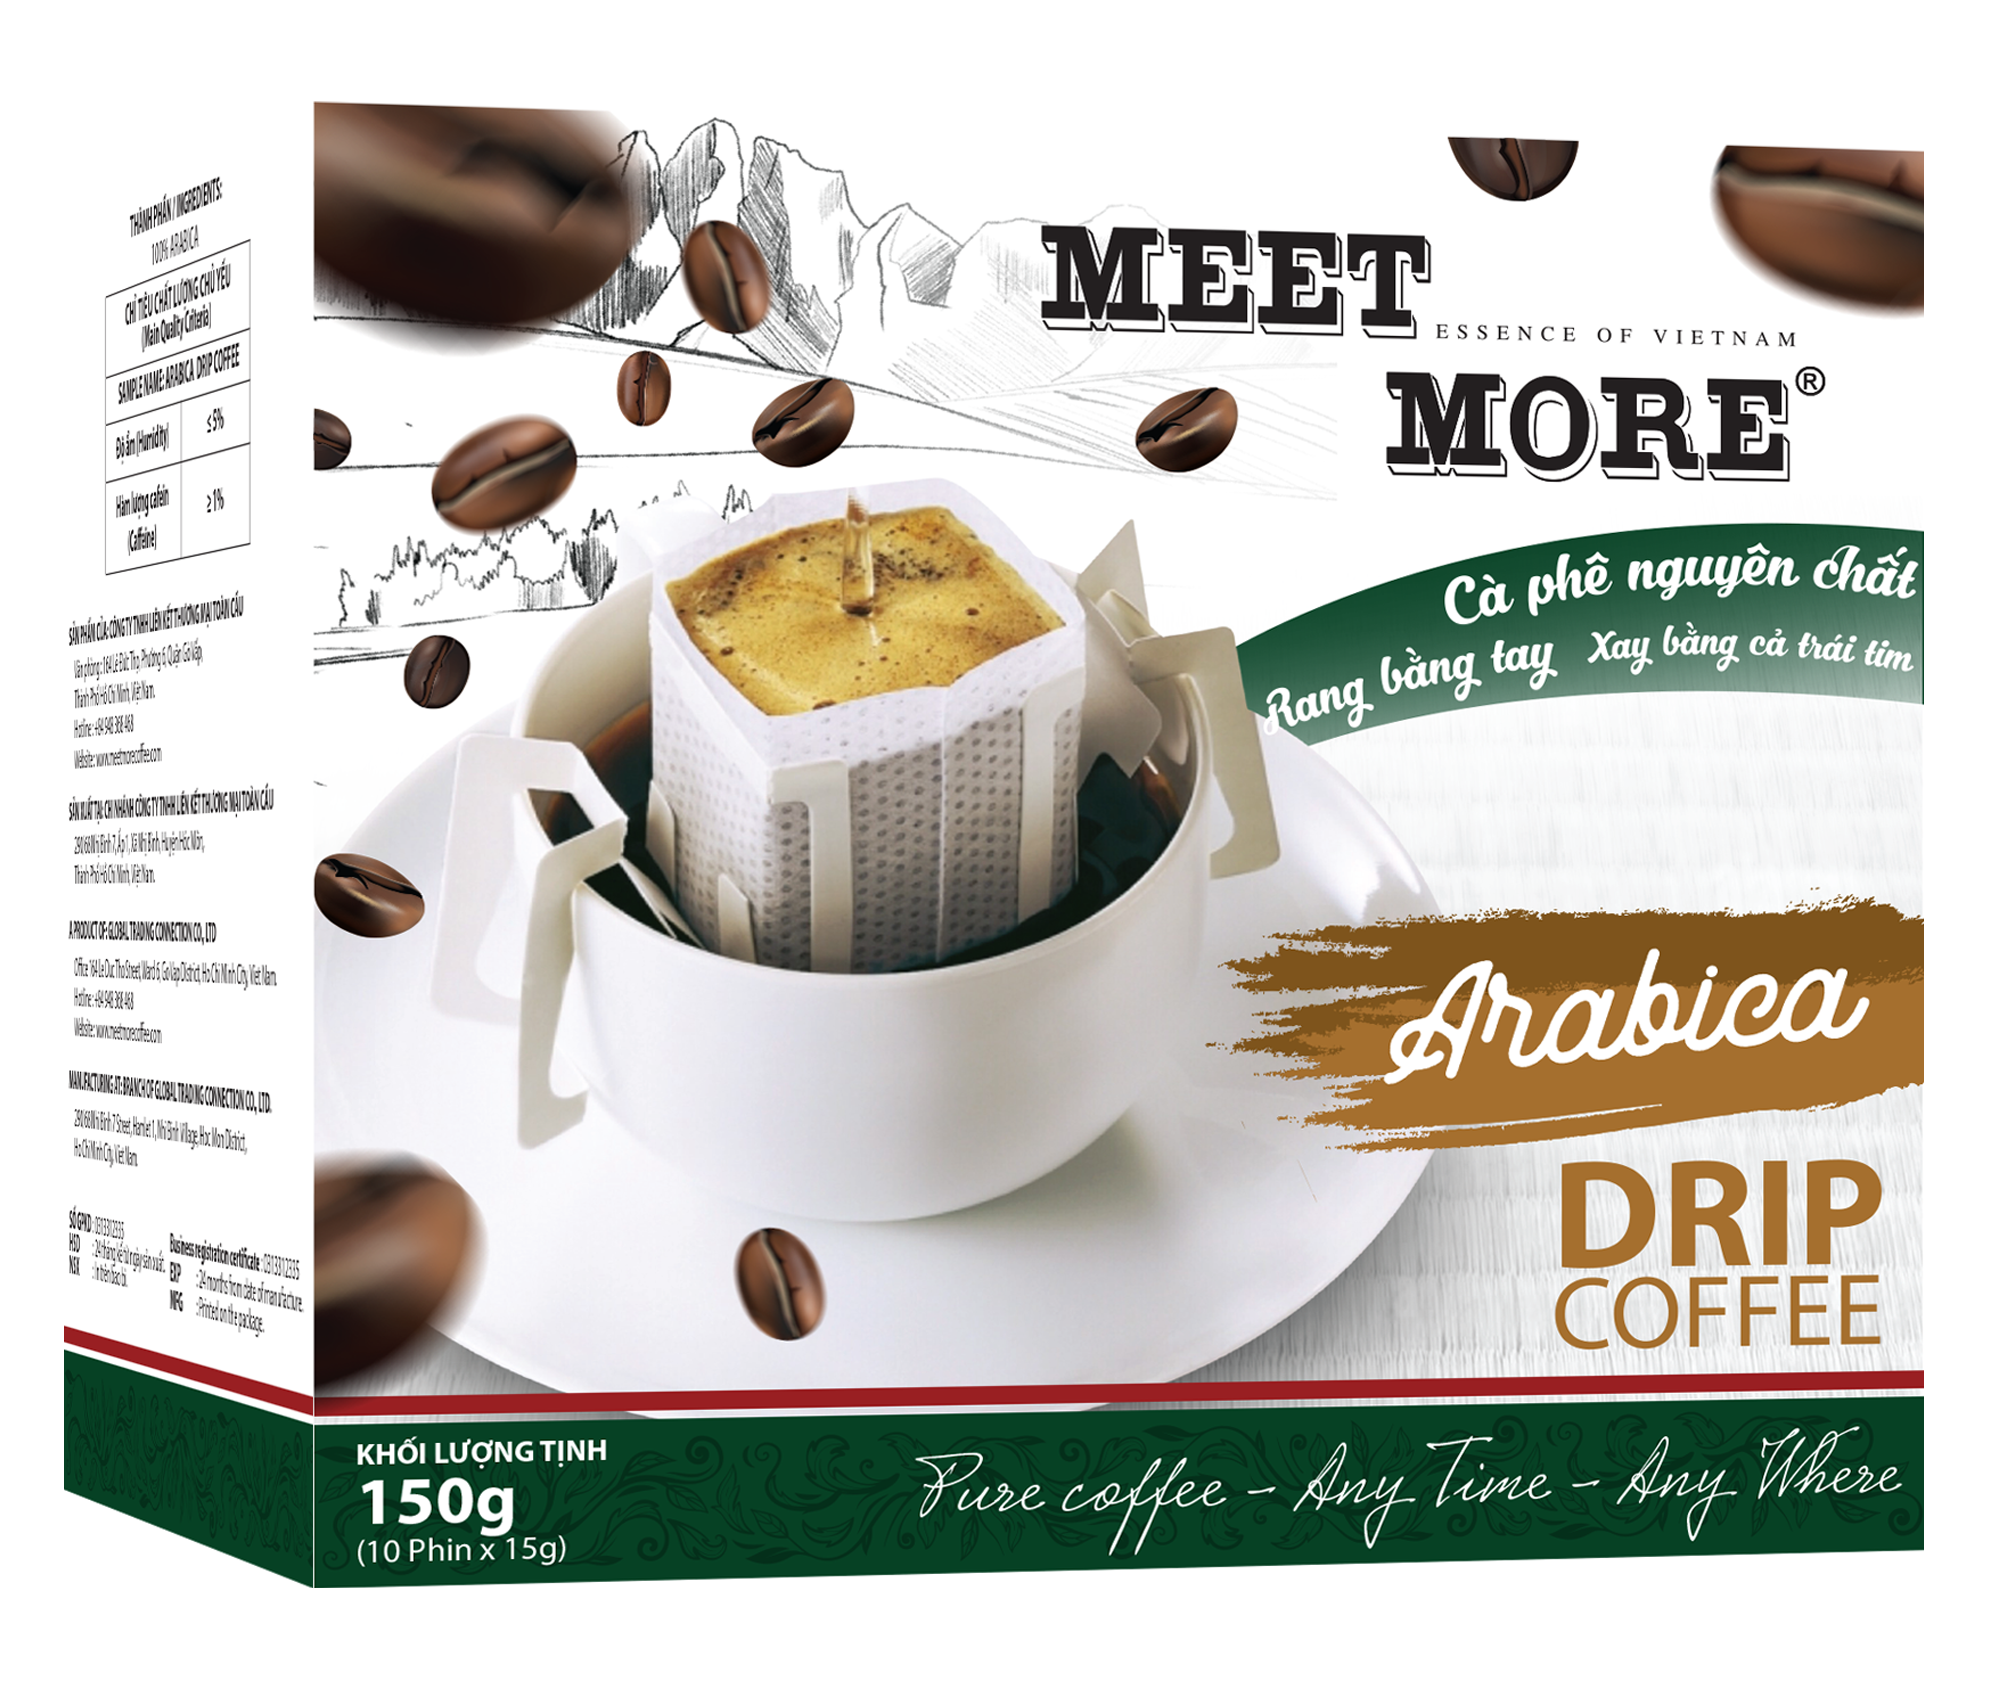 Cà phê phin giấy Arabica - MEET MORE COFFEE